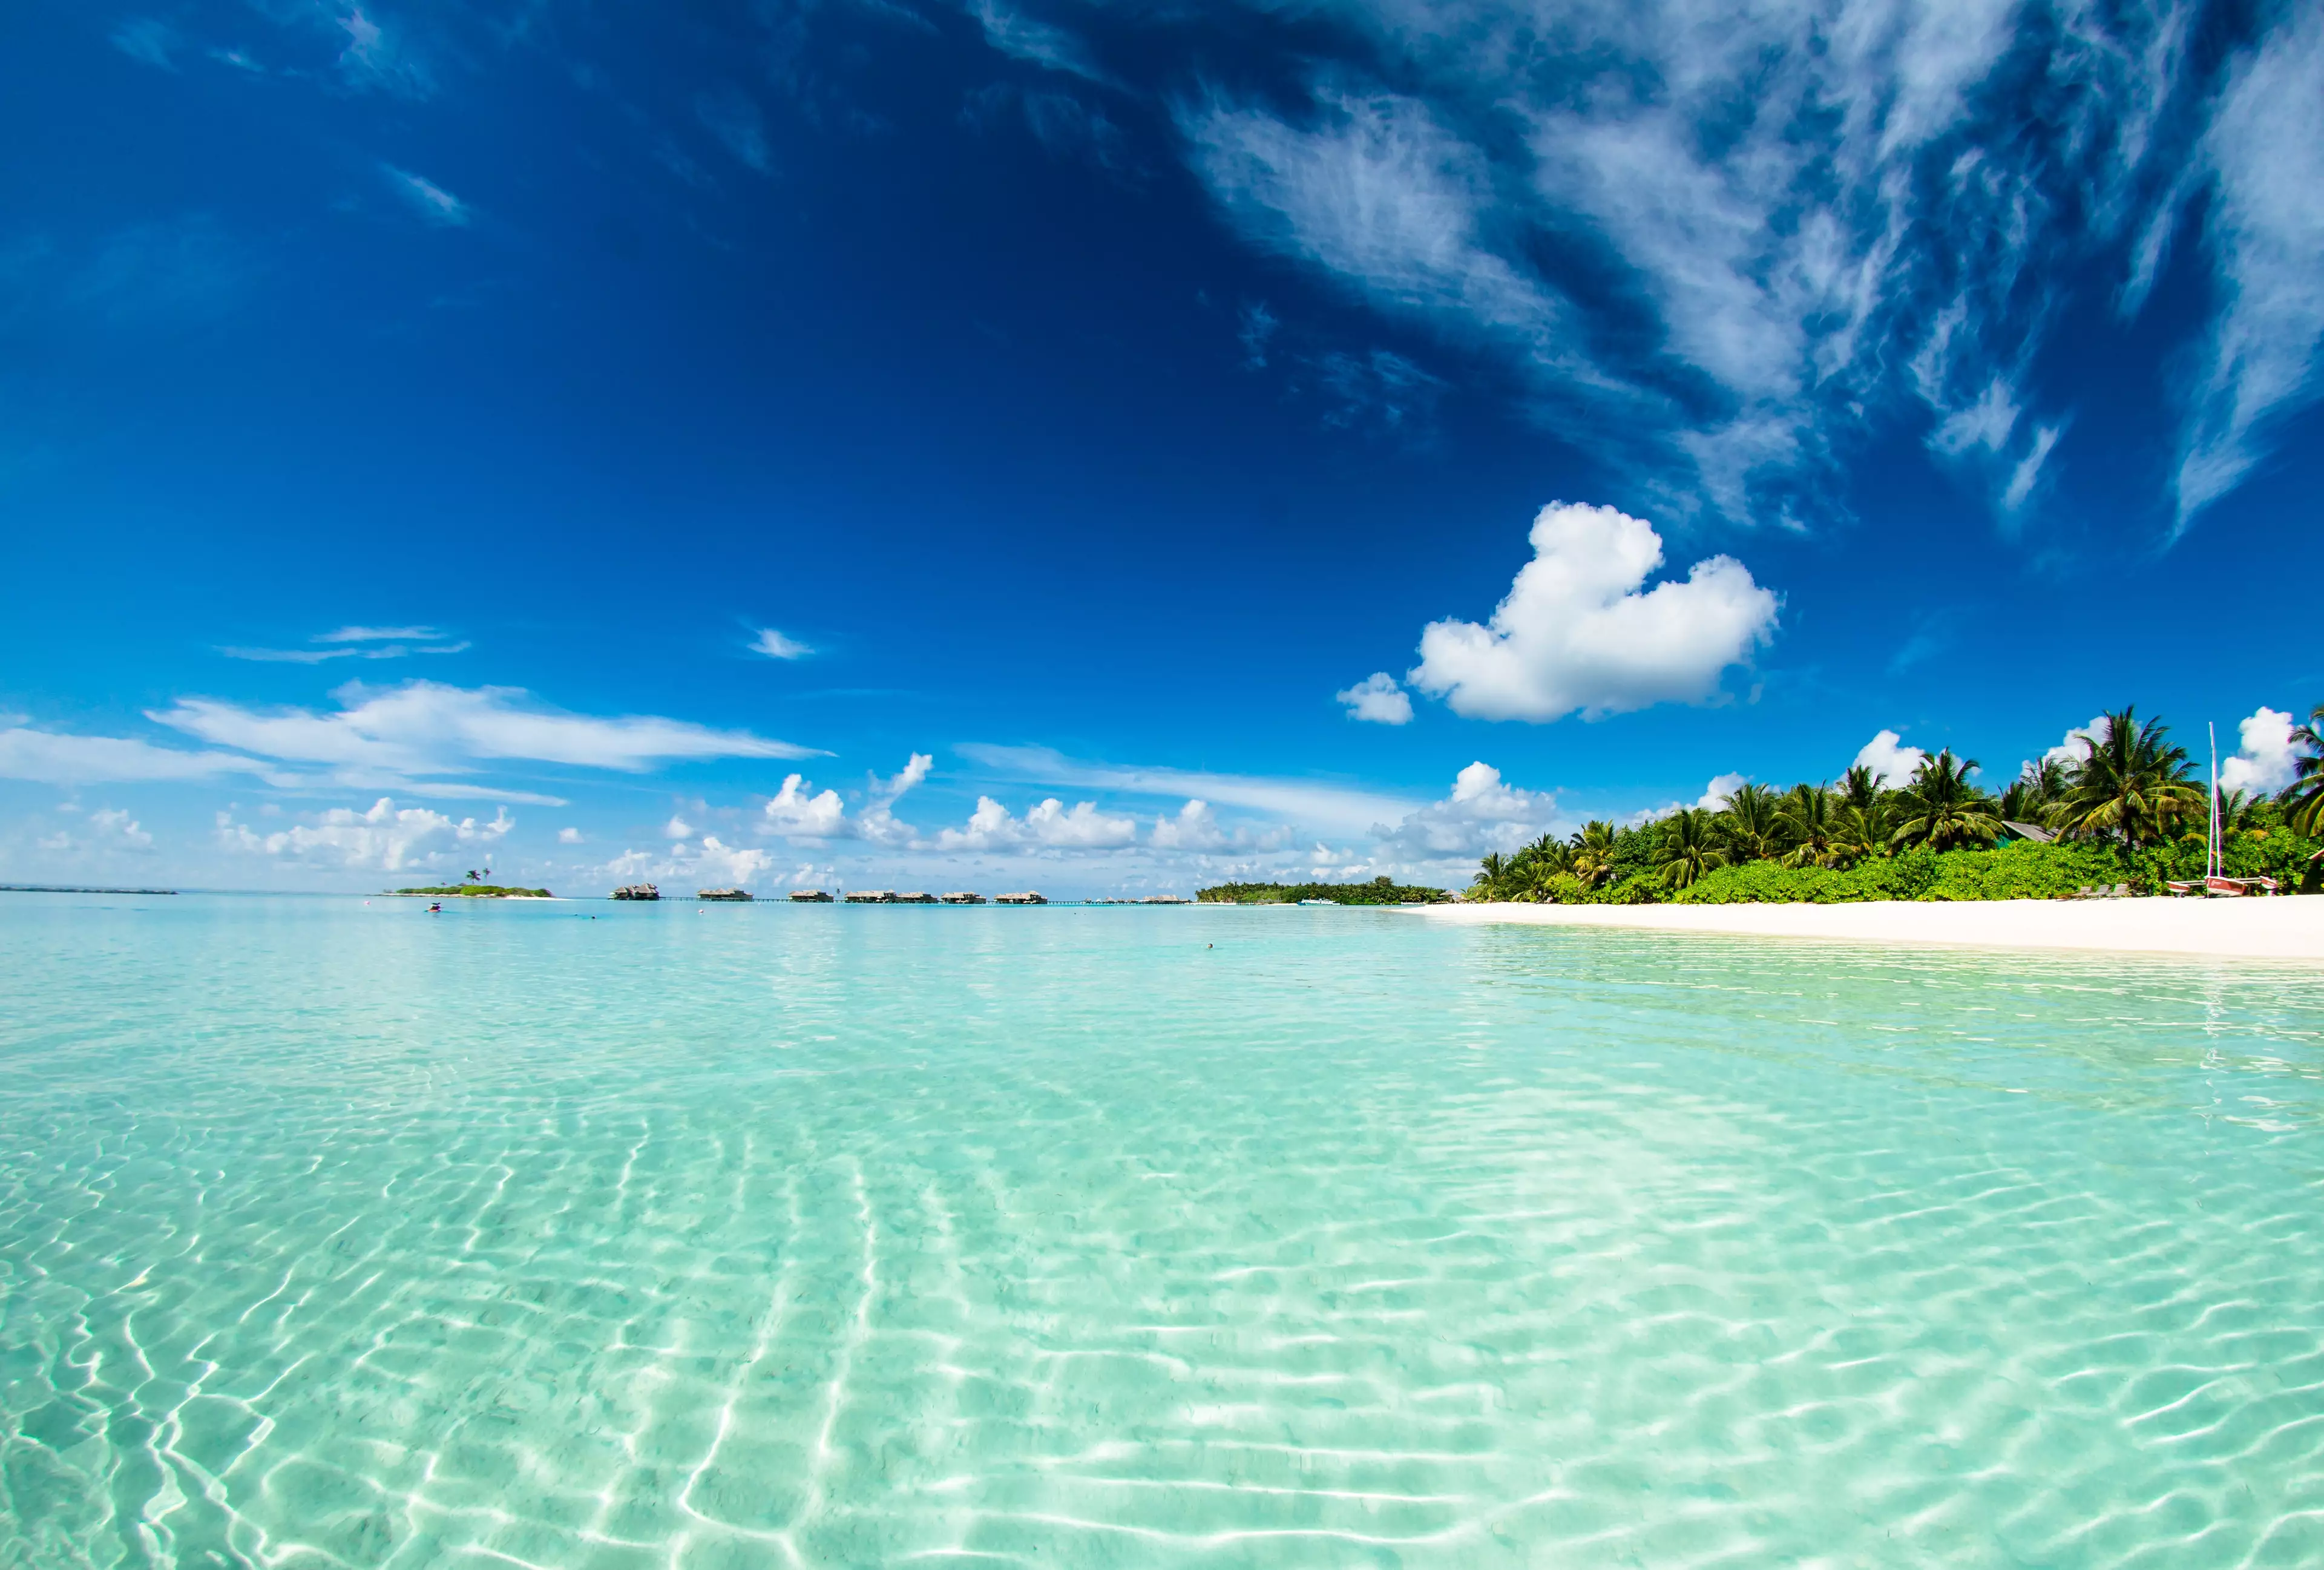 Fancy a trip to the Maldives? (